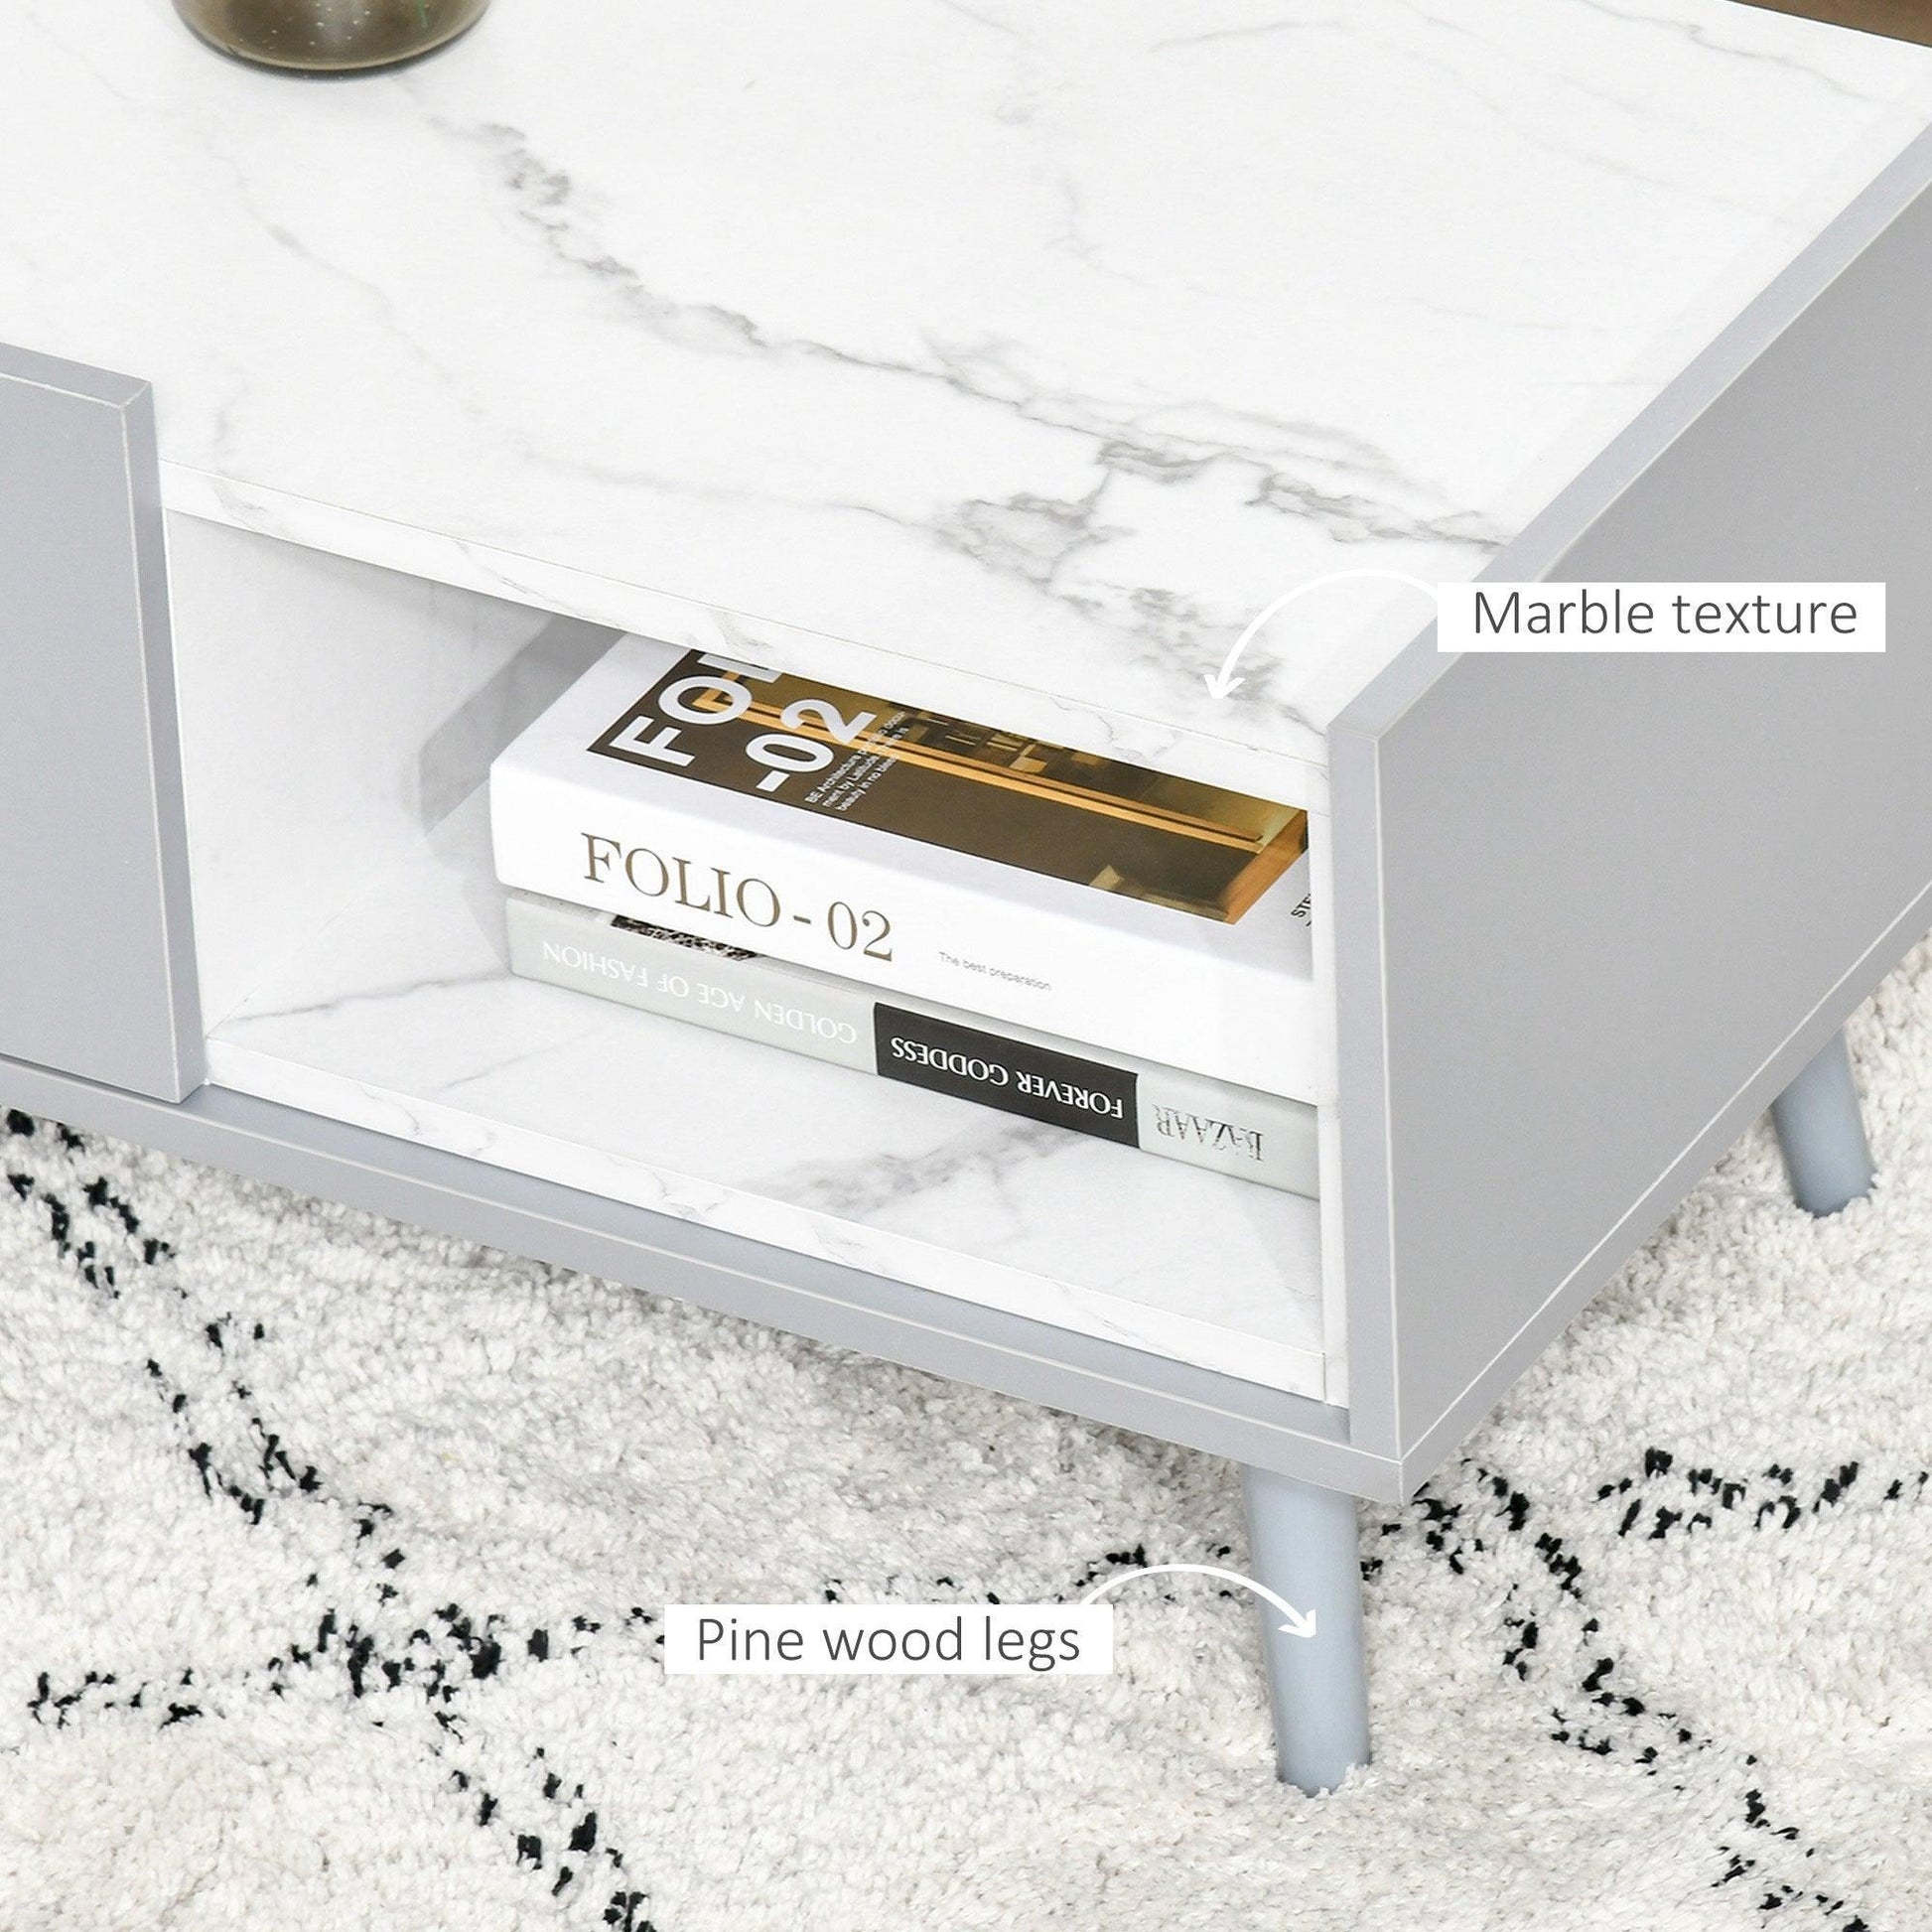 HOMCOM Marble Coffee Table | Storage Side Furniture | Grey-White - ALL4U RETAILER LTD